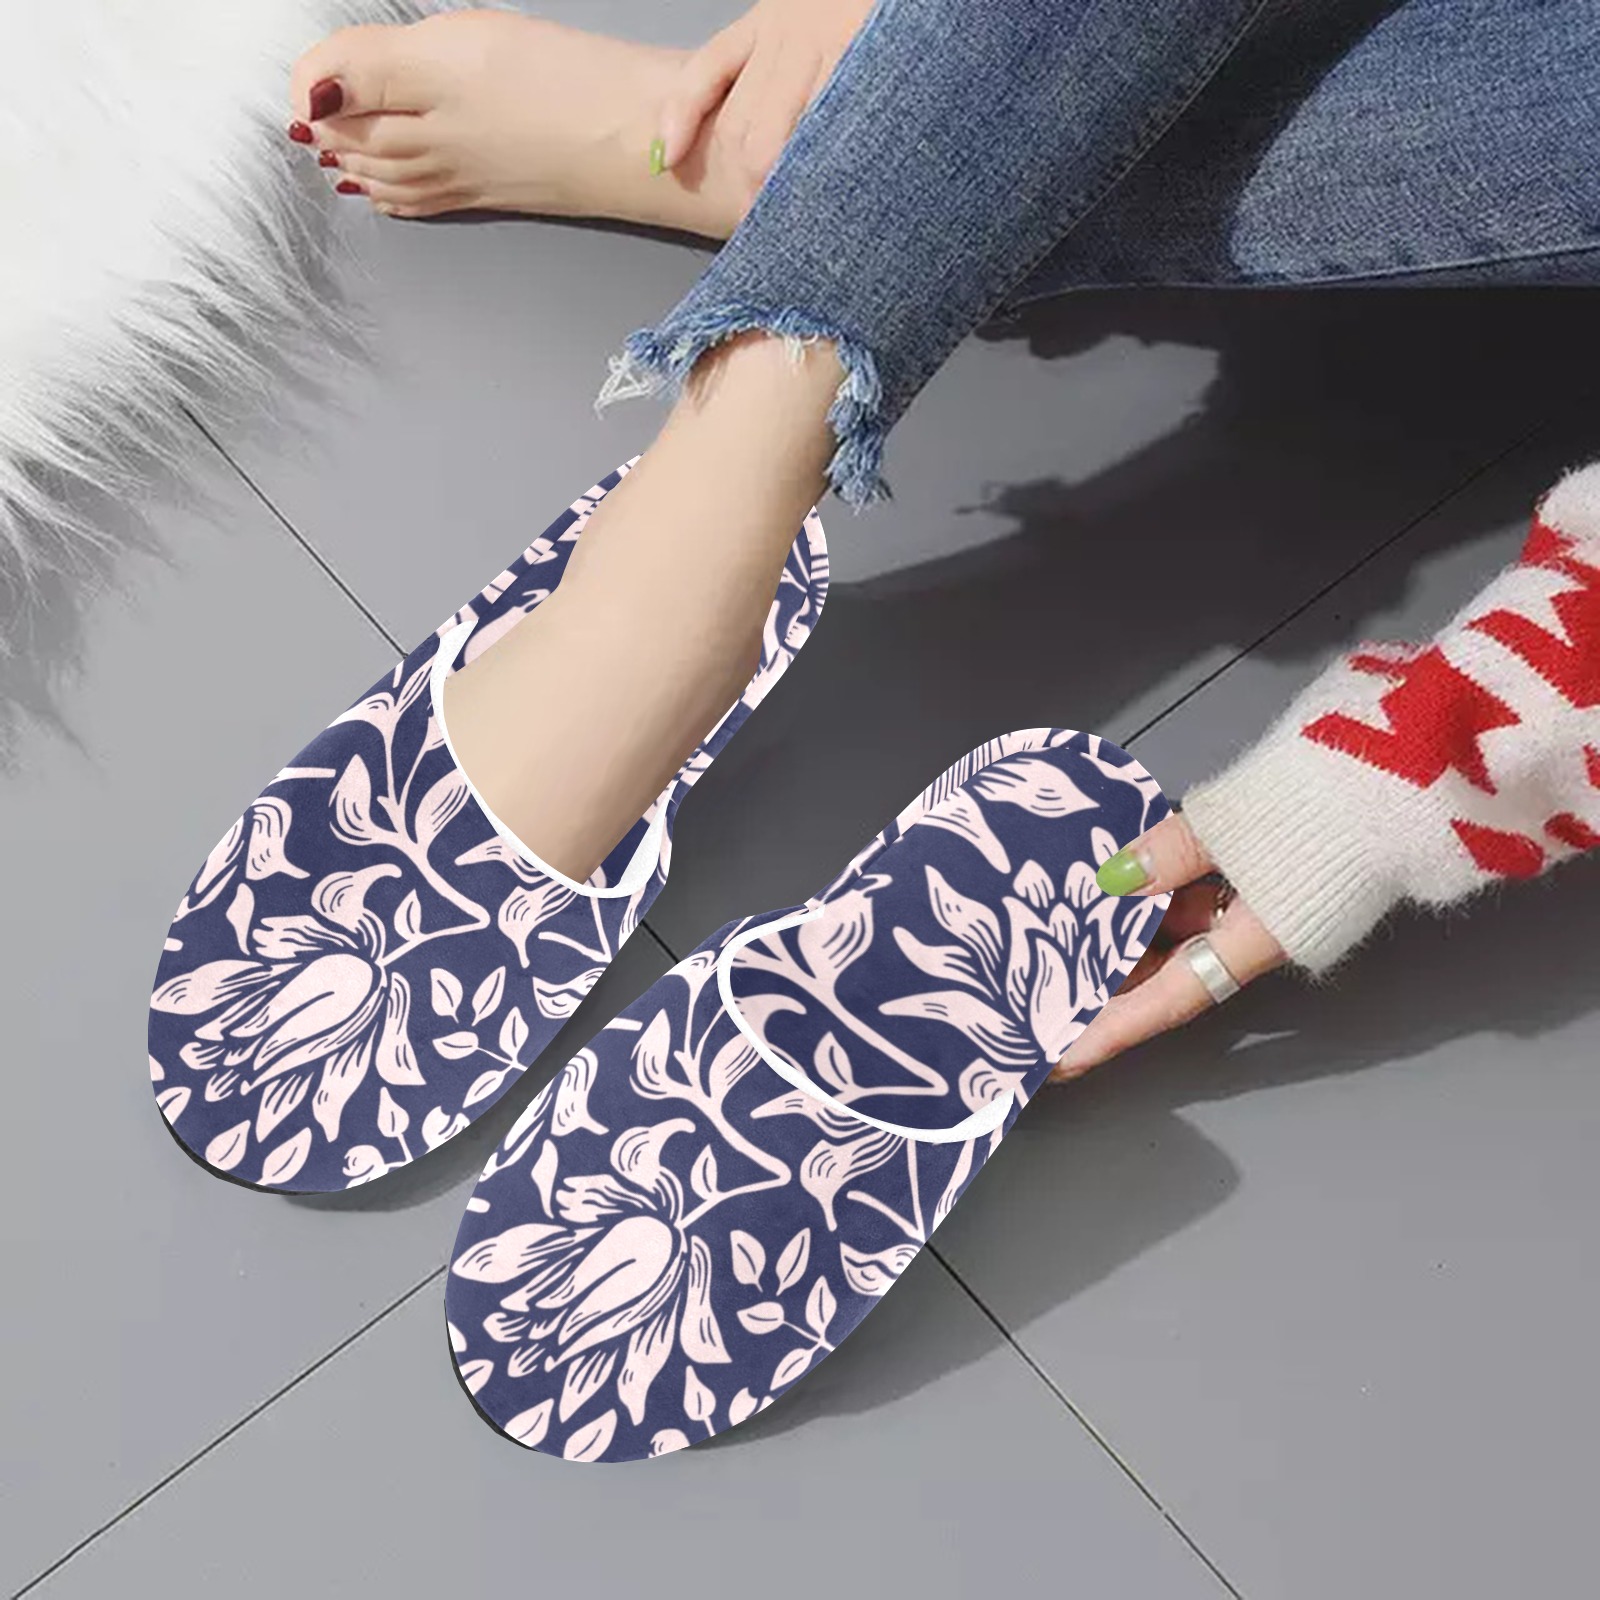 Shoes Women's Cotton Slippers (Model 0601)